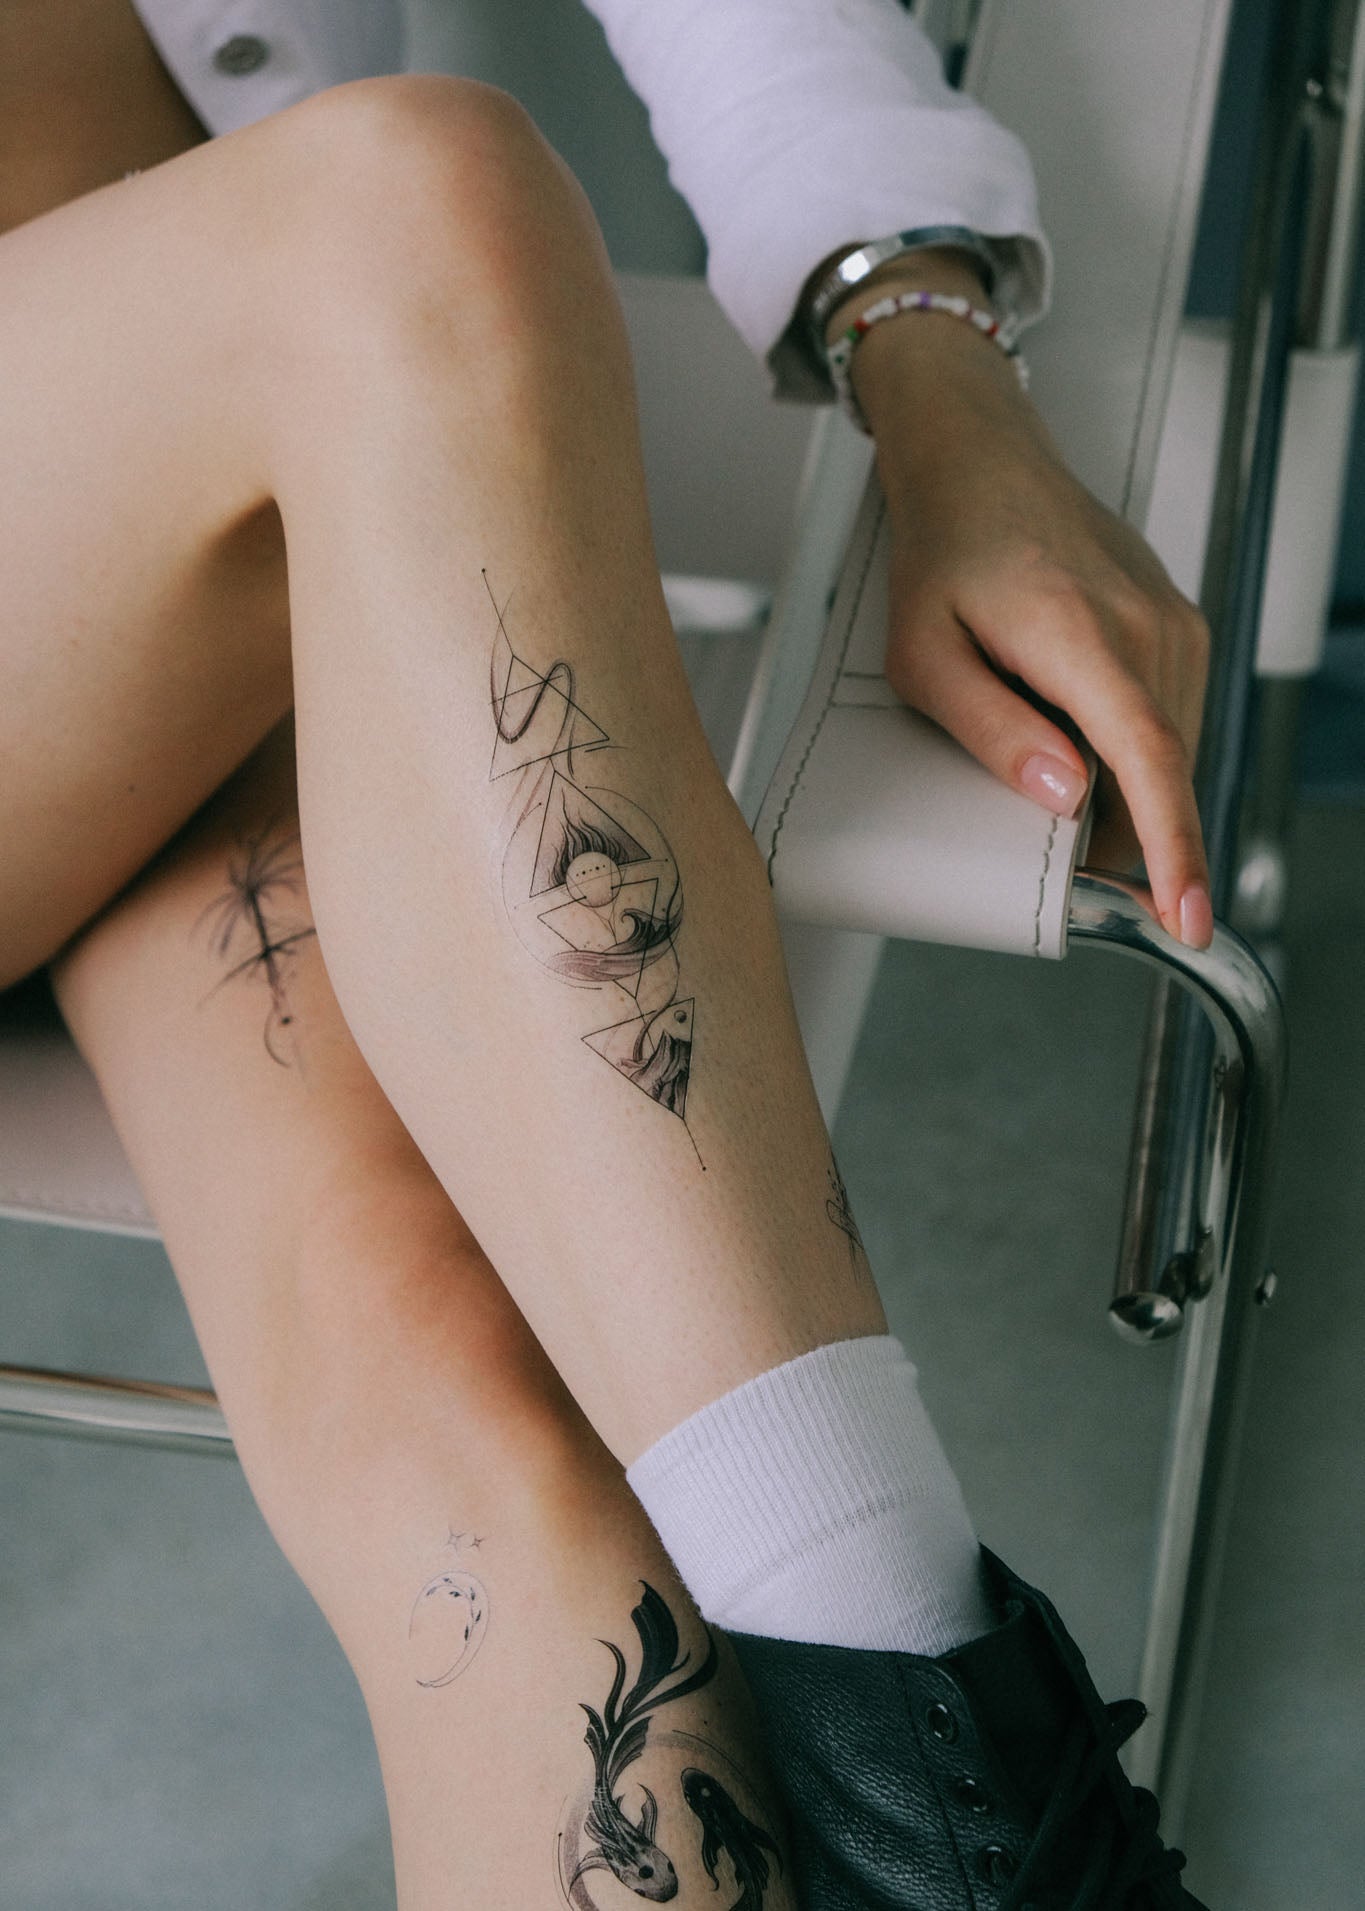 tattoos | Tumblr | Tattoos for daughters, Tattoos, Calf tattoo